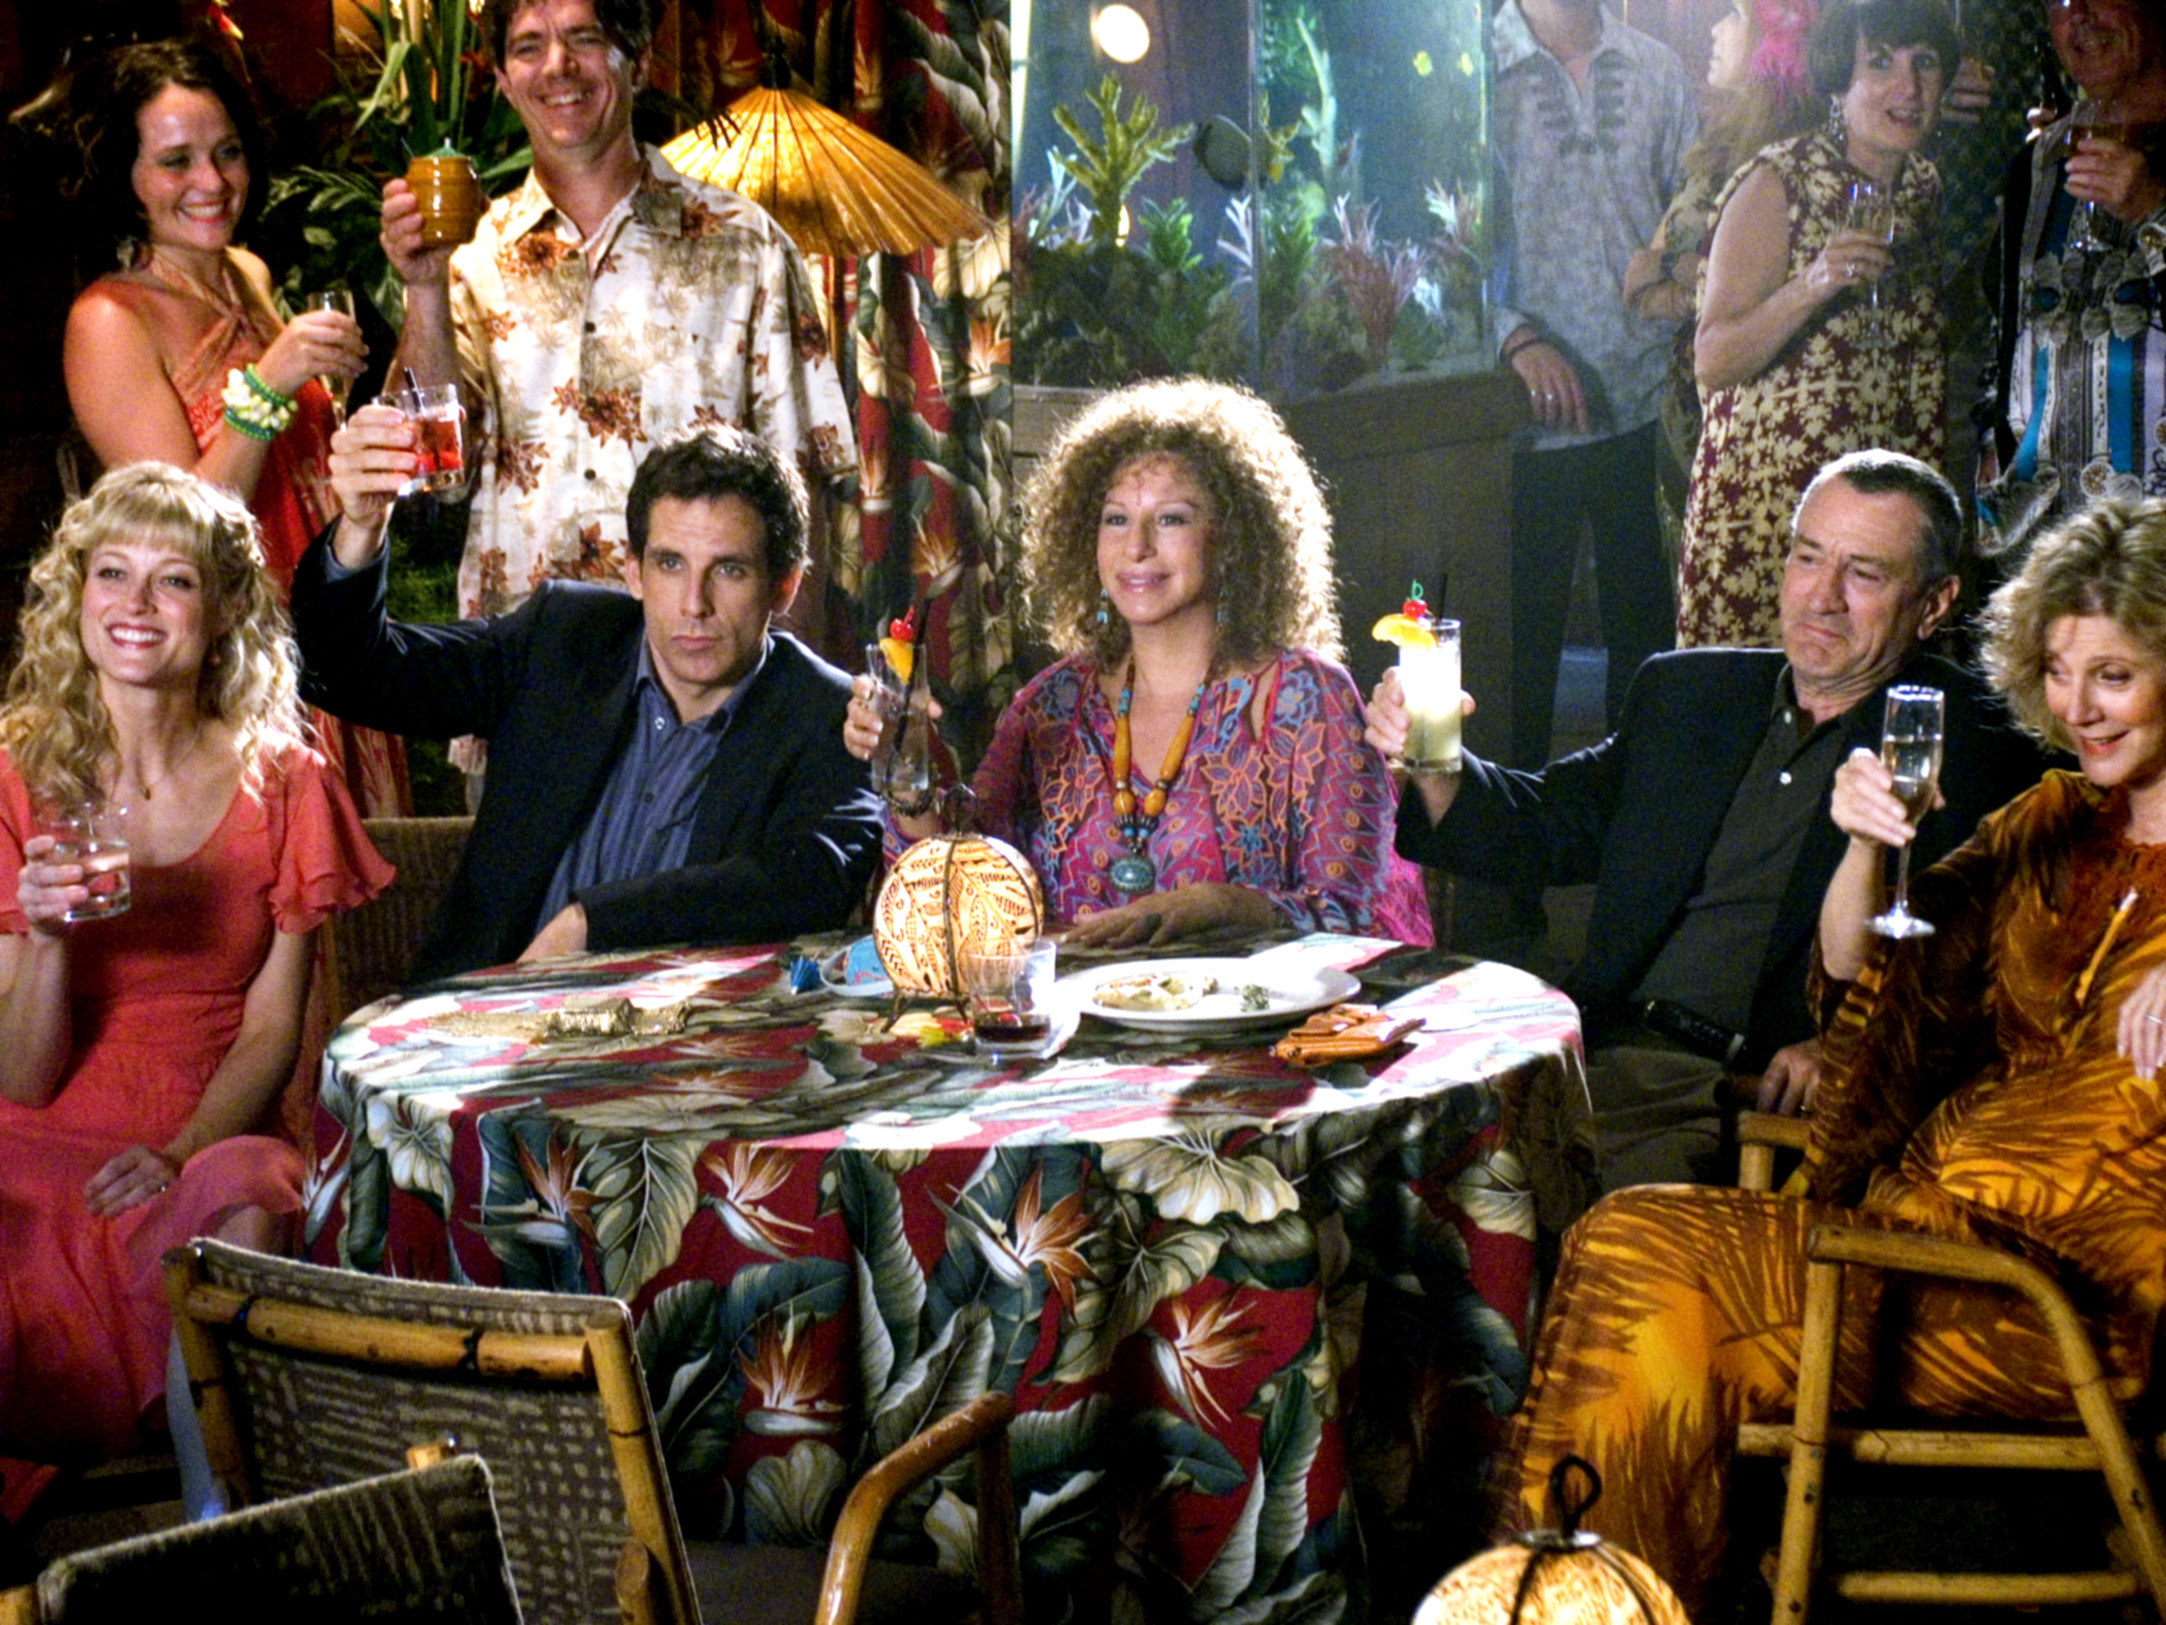 Teri Polo, Ben Stiller, Barbra Streisand, Robert De Niro, Blythe Danner, raising their glass for a toast